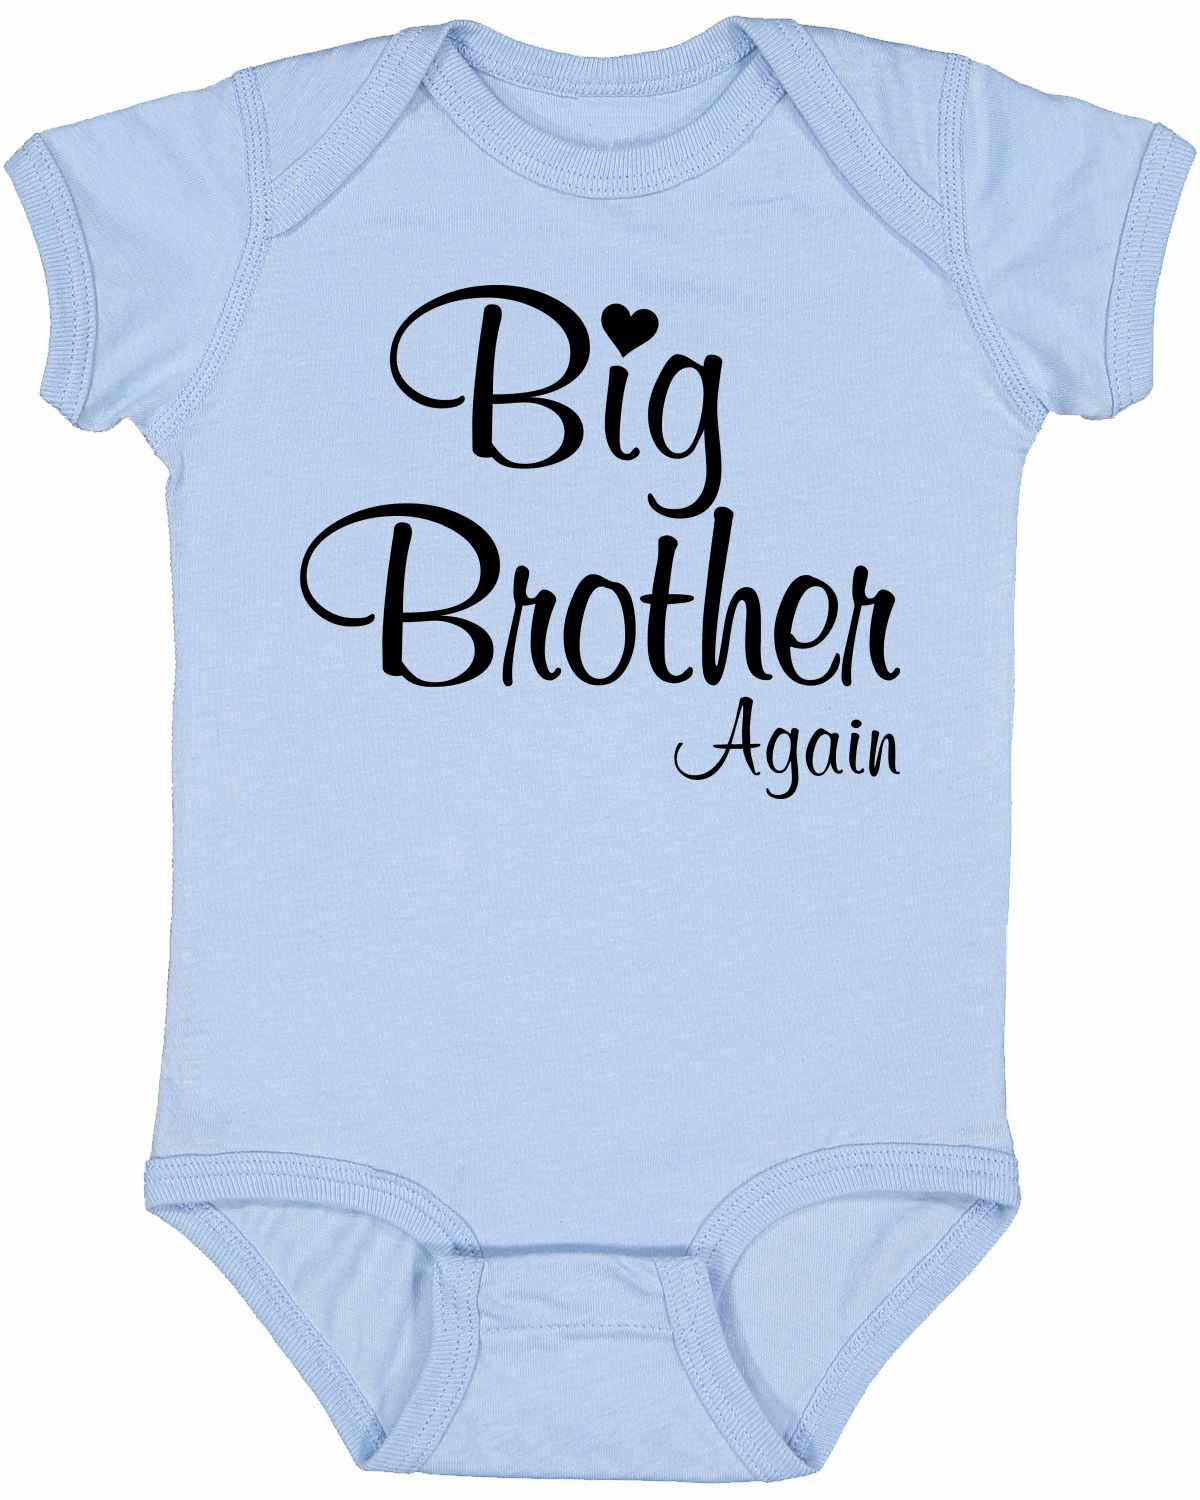 Big Brother Again on Infant BodySuit